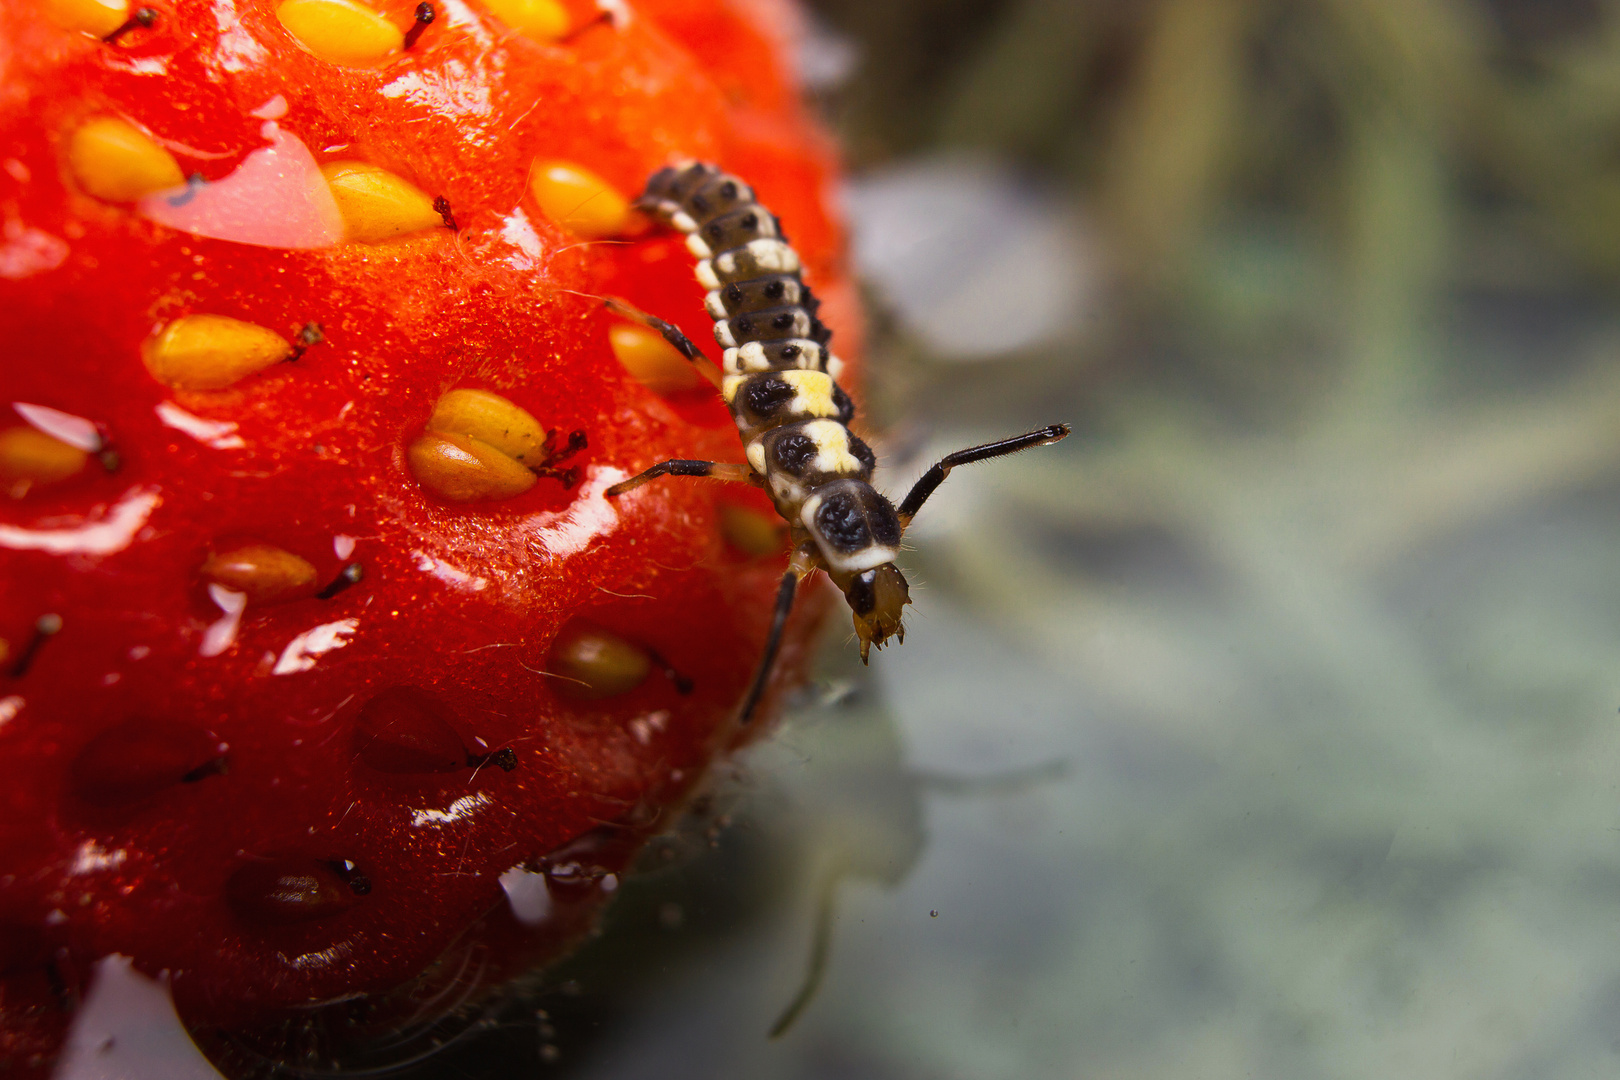 Ladybug larvae in a strawberry romantic way. =)